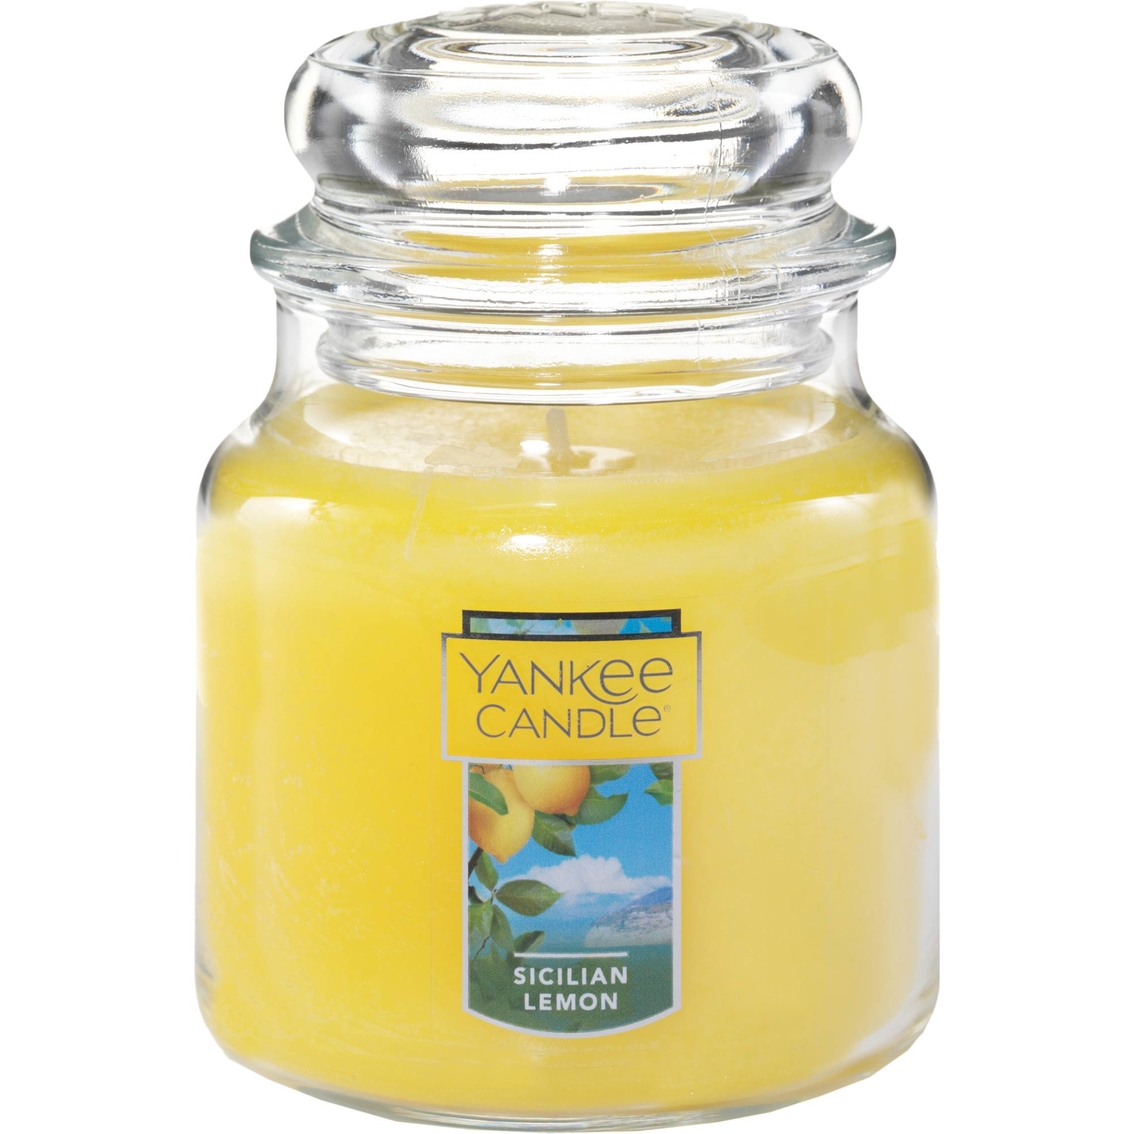 Yankee Candle Sicilian Lemon Medium Jar Candle | Candles & Home ...